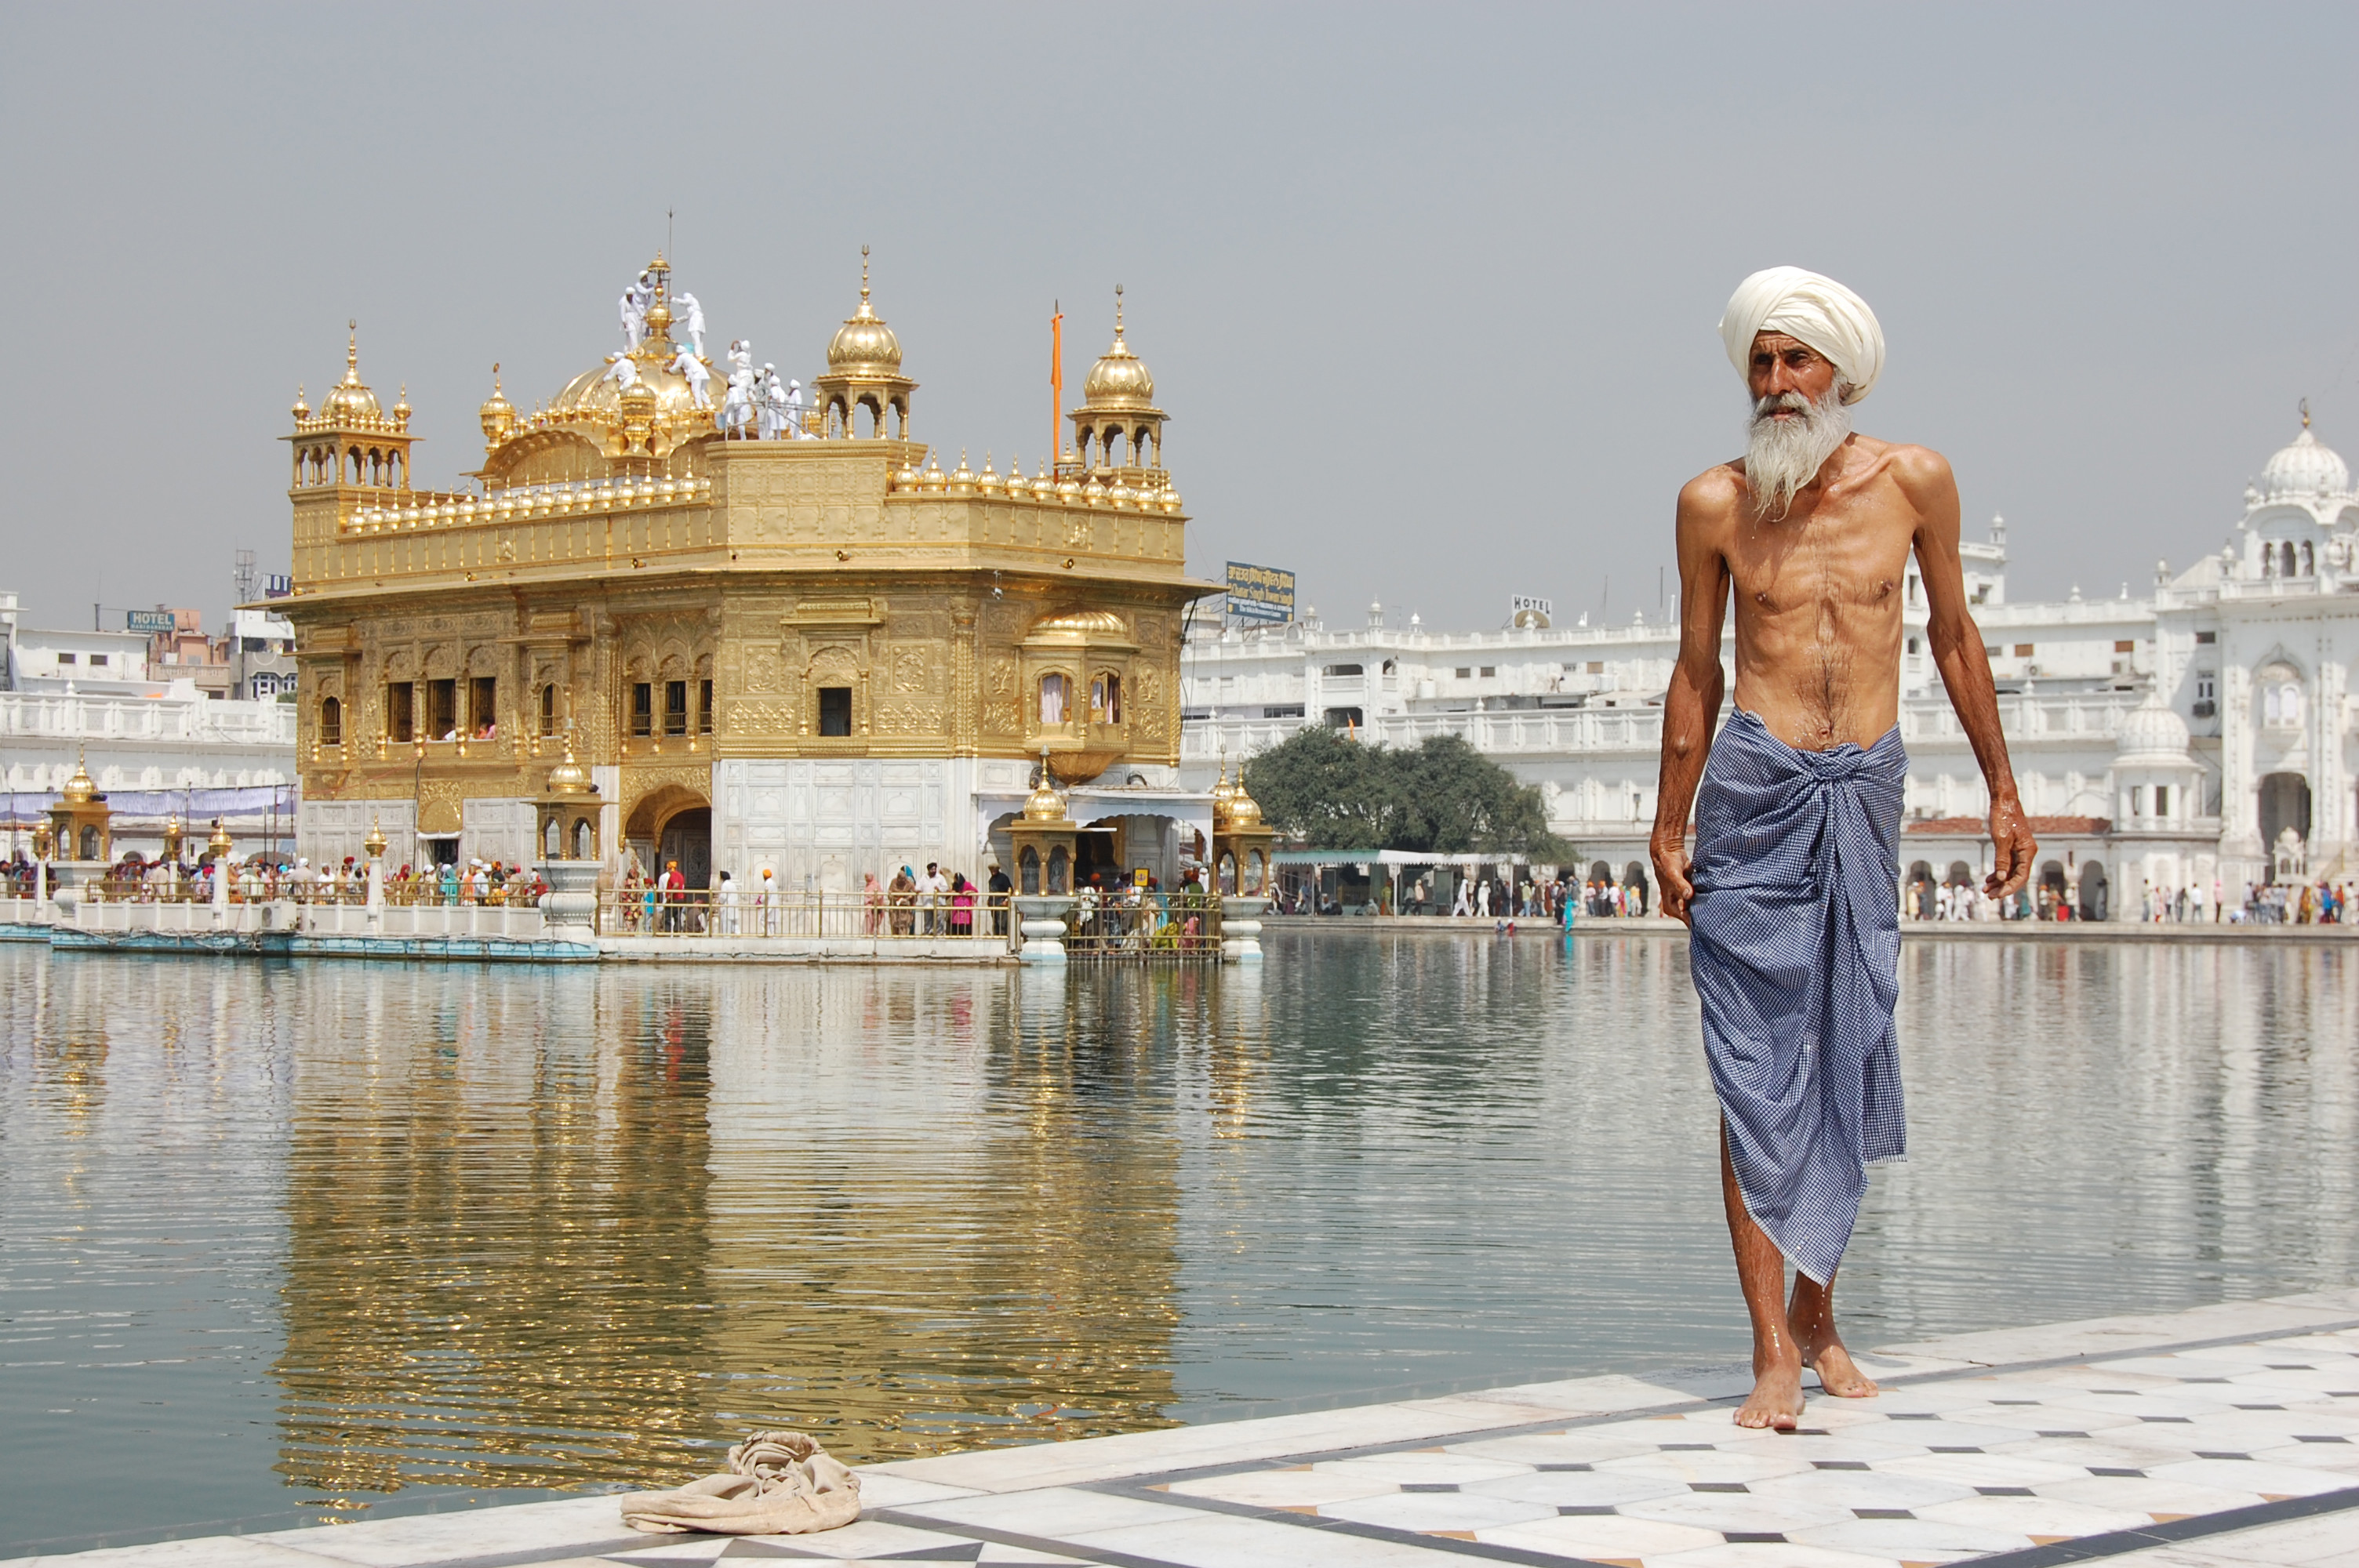 3008x2000 File:Sikh pilgrim at the Golden Temple (Harmandir Sahib) in Amritsar, India